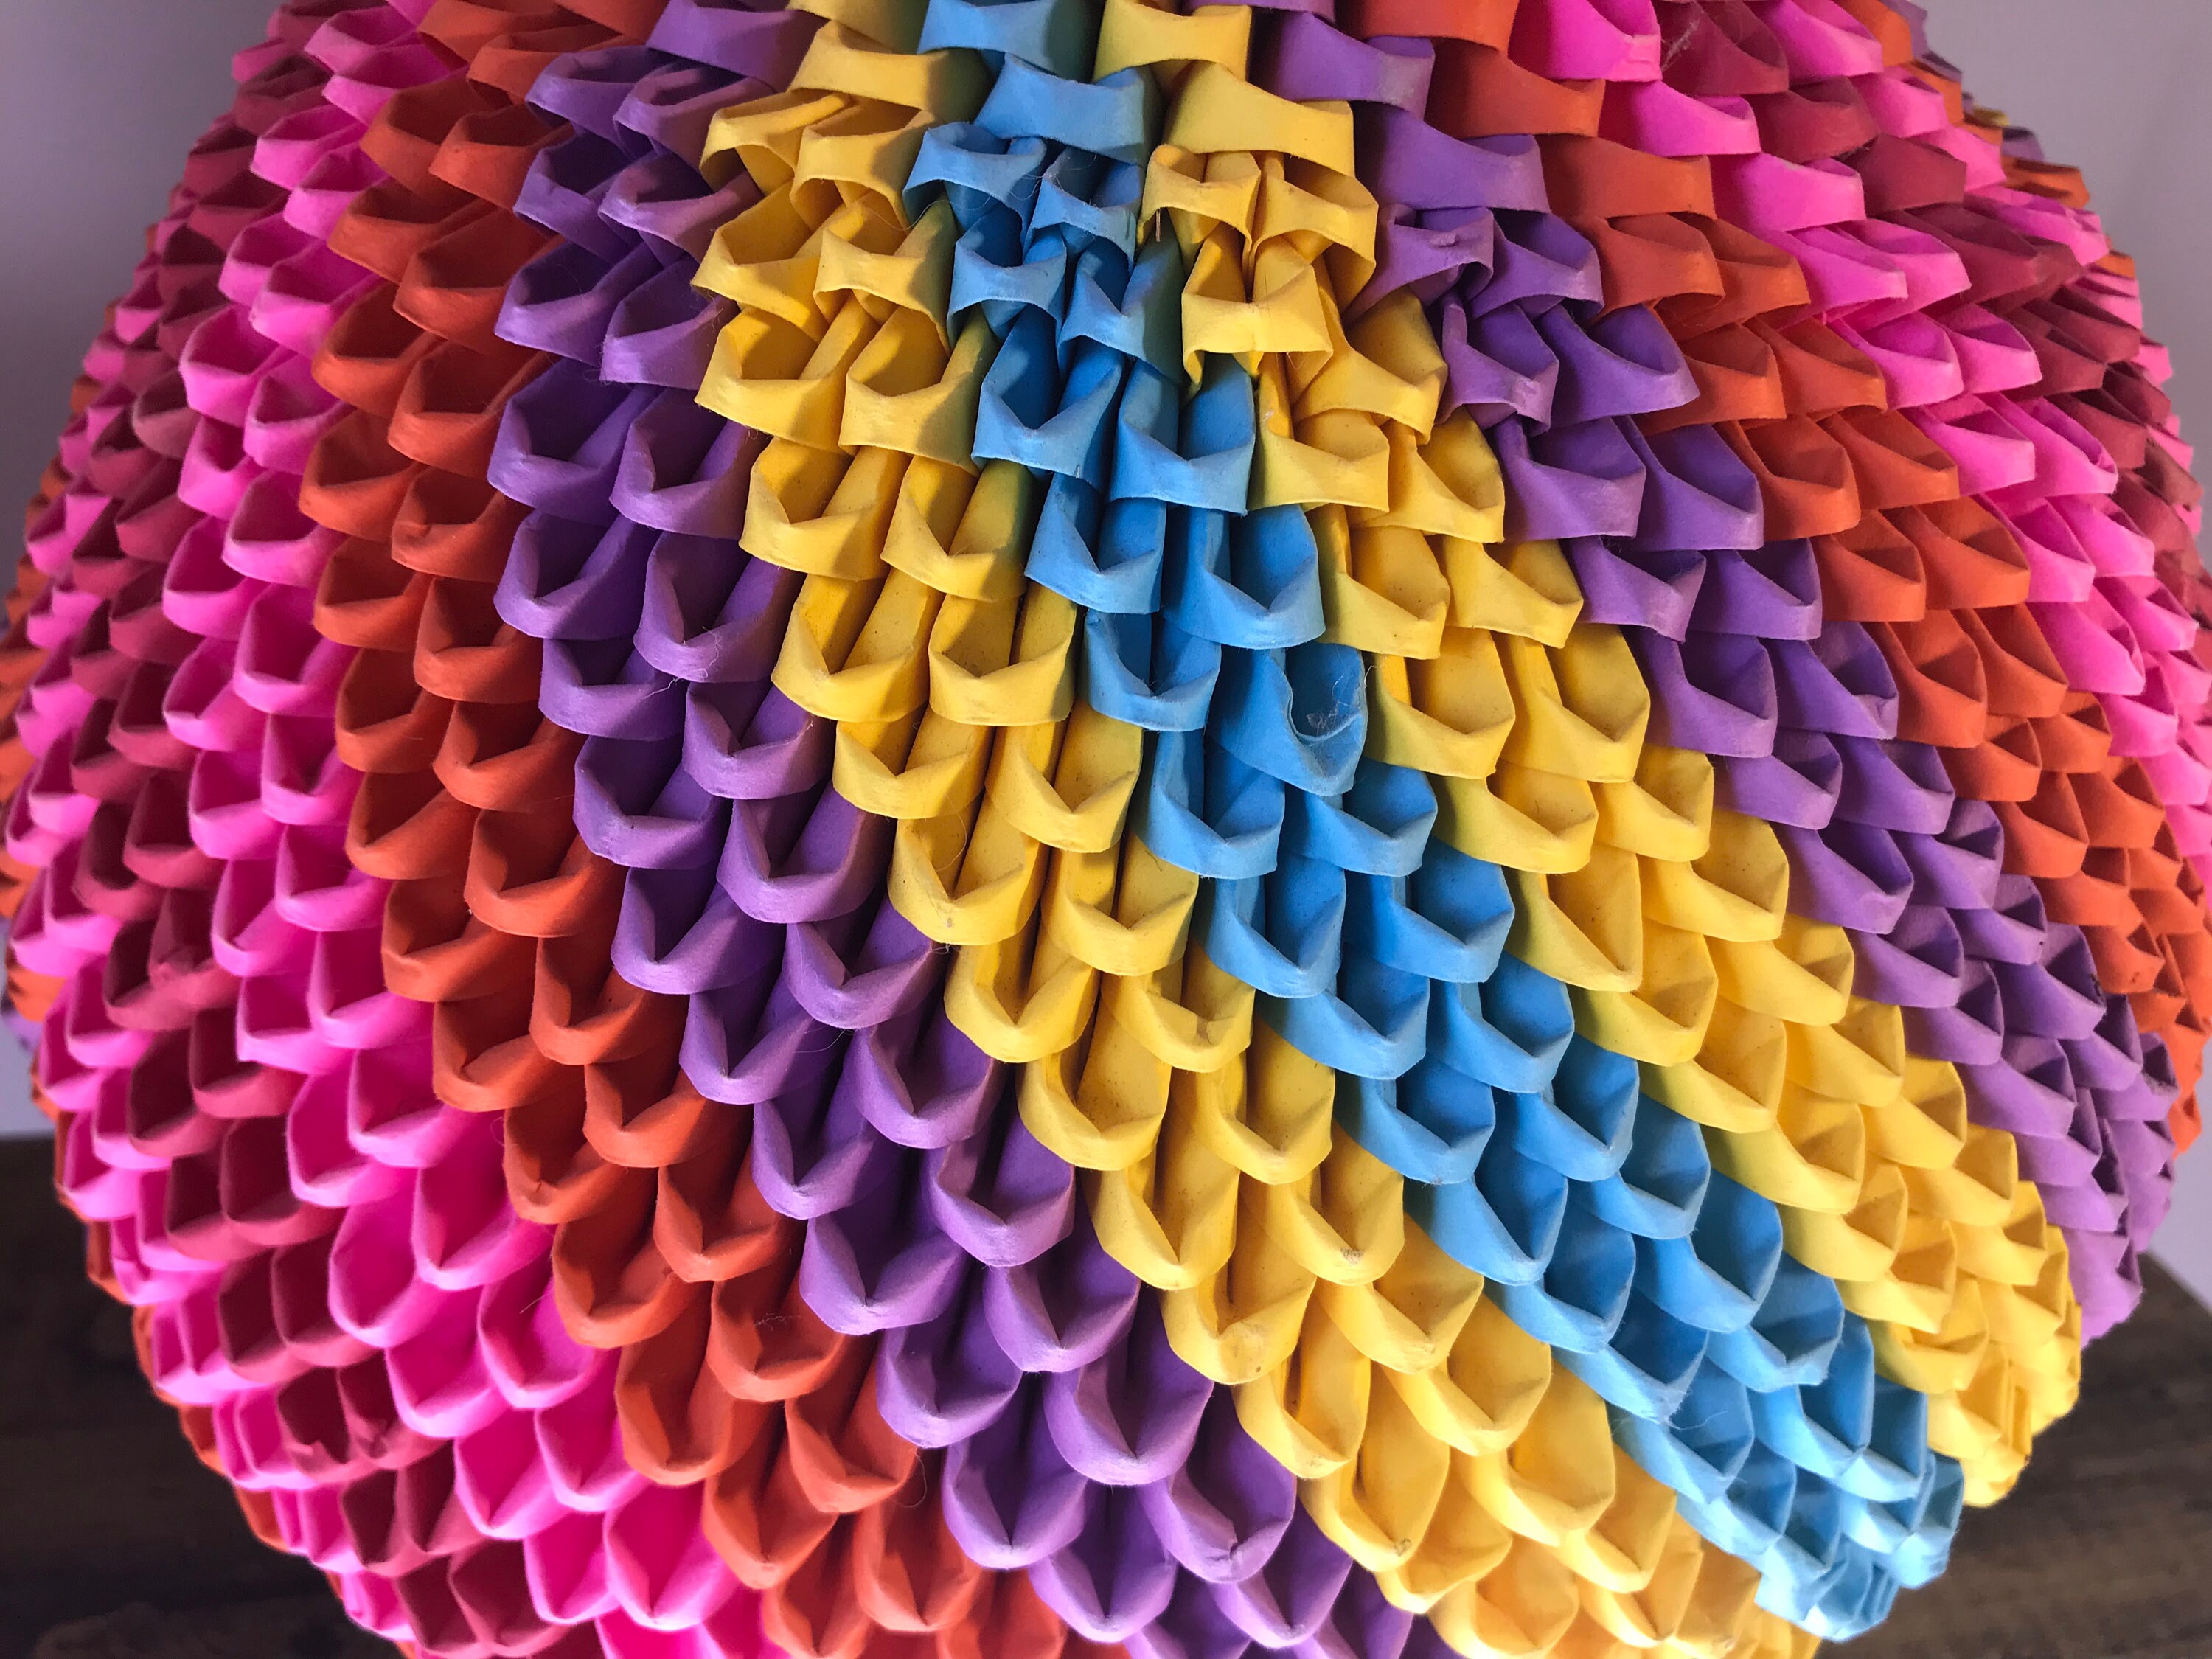 Origami Art - Neon, Paper Wall Art by LeeMo Designs